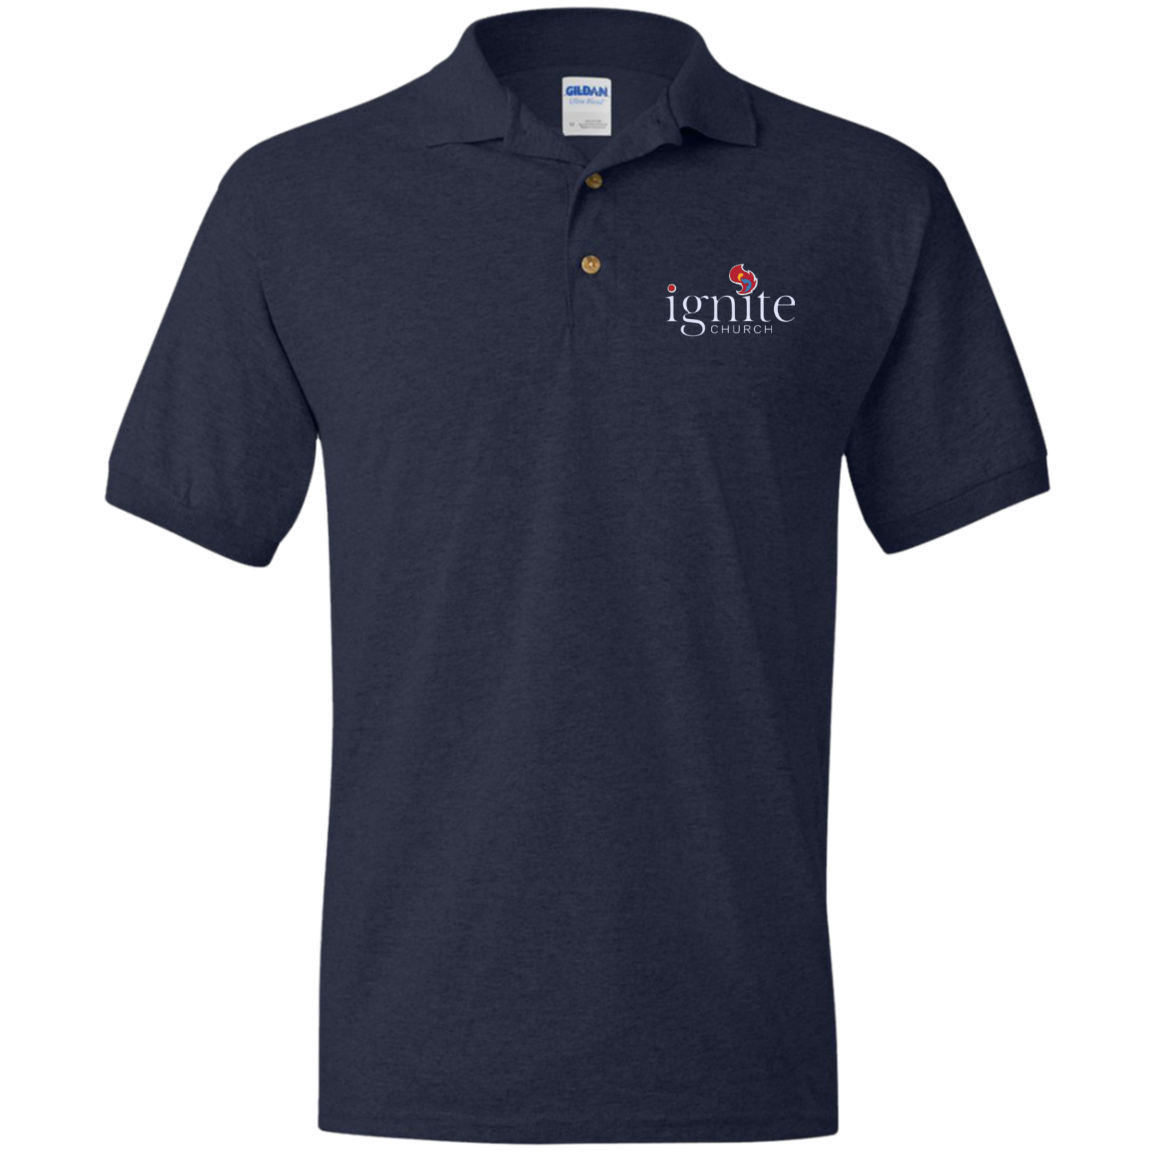 IGNITE church - Jersey Polo Shirt Unisex - Kick Merch - 4